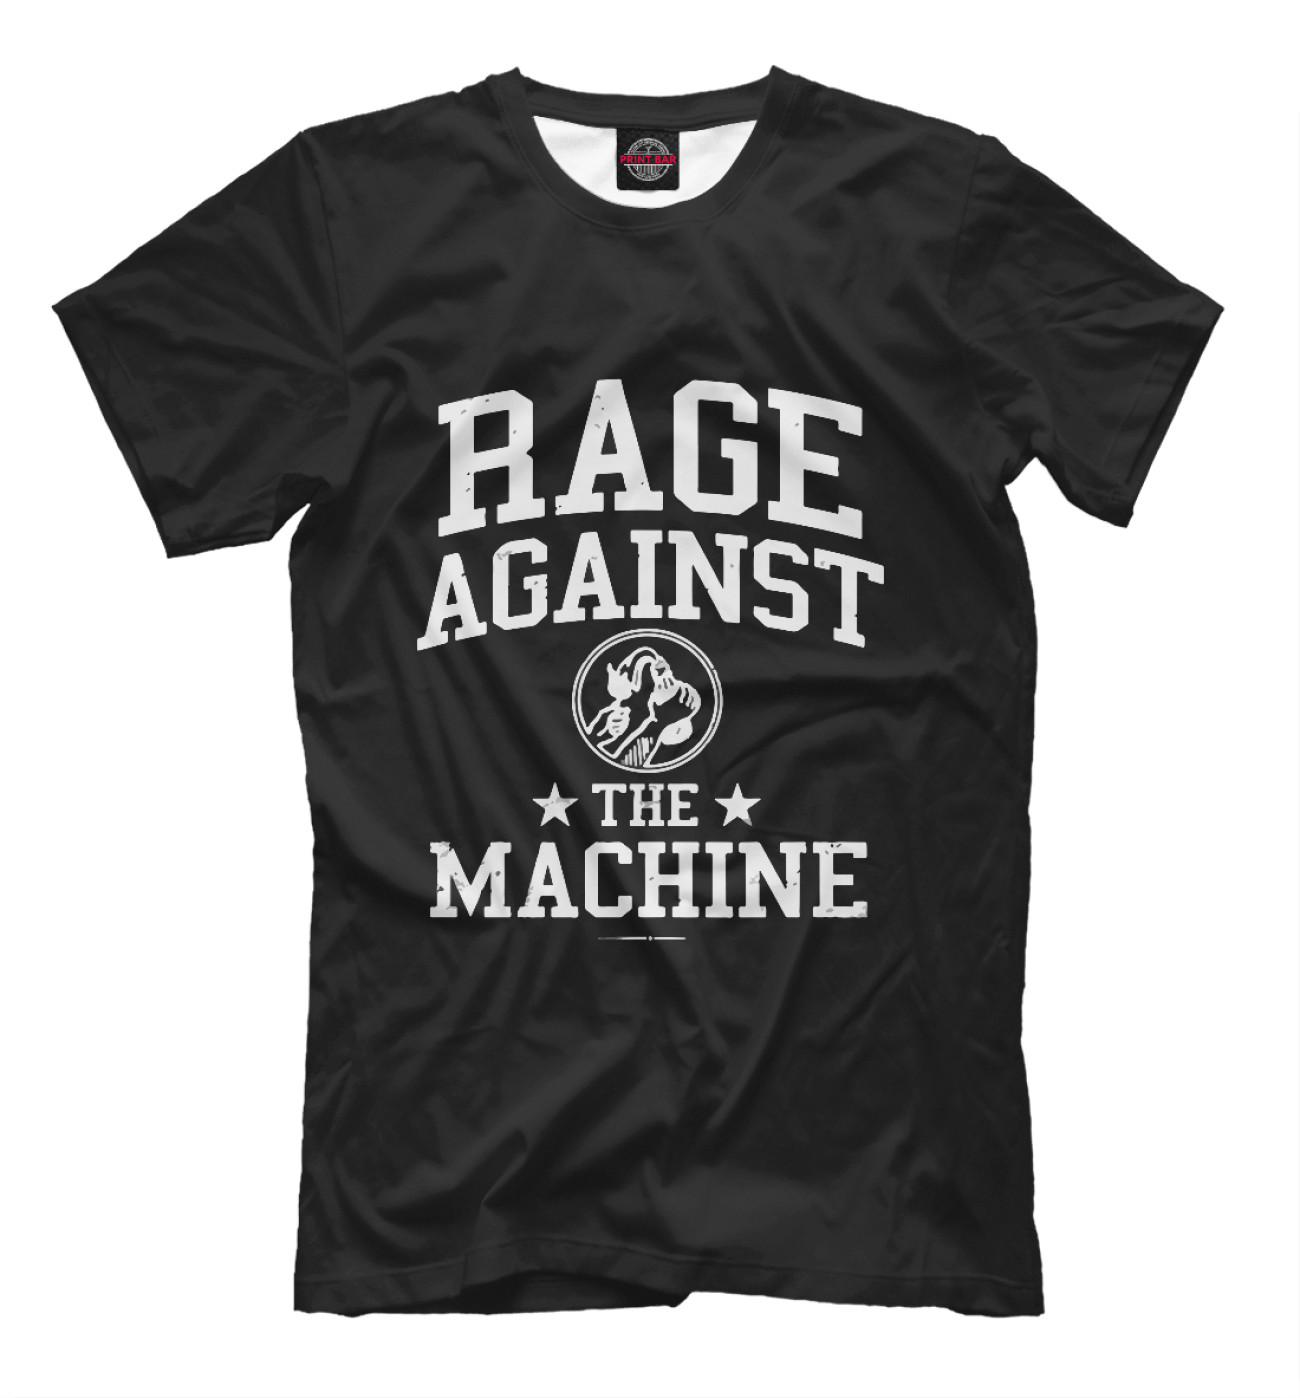 Мужская Футболка Rage Against the Machine, артикул: RAM-756702-fut-2